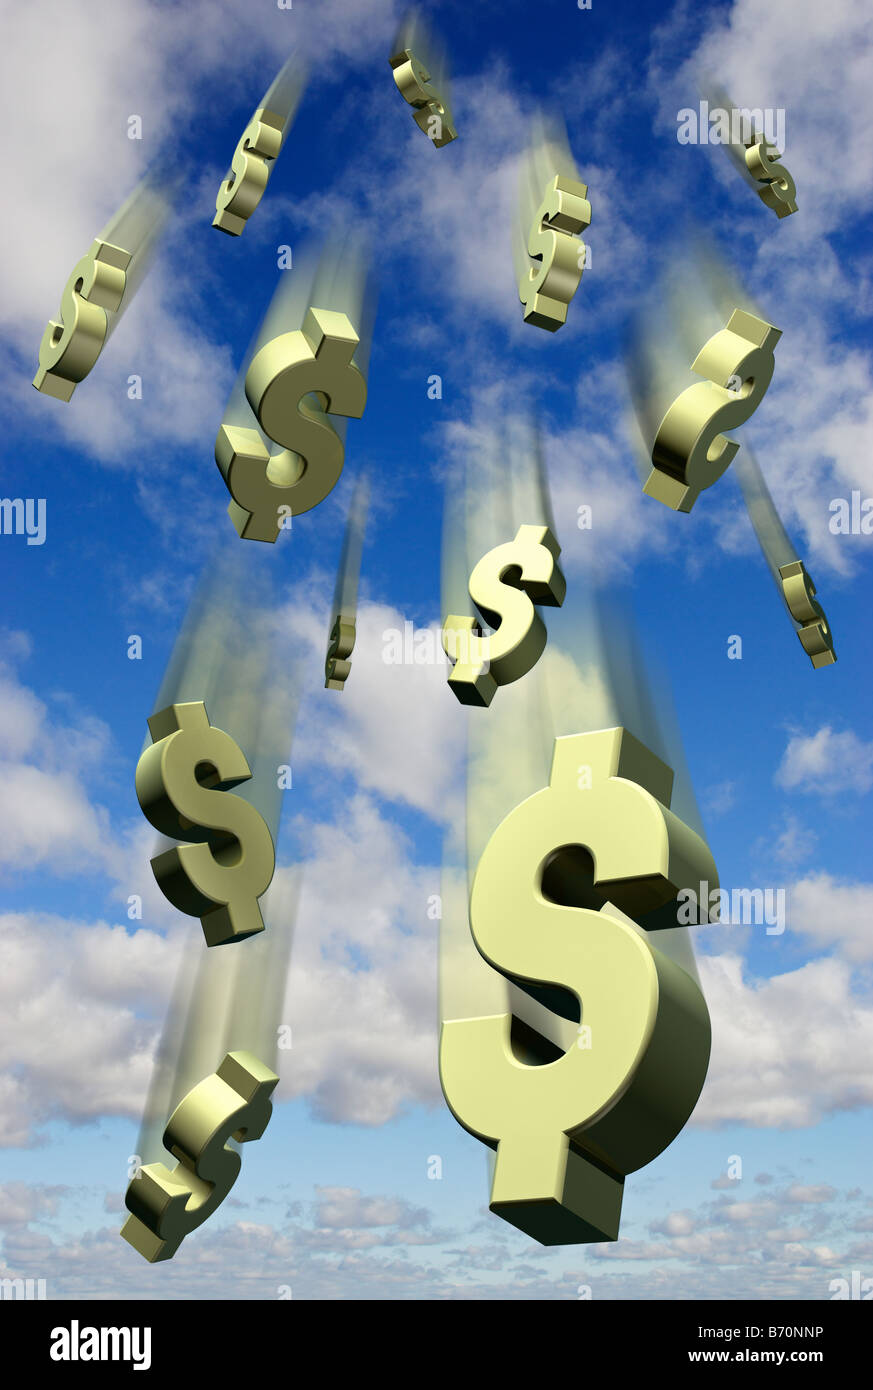 Falling US Dollar symbols against a blue sky - digital composite Stock Photo